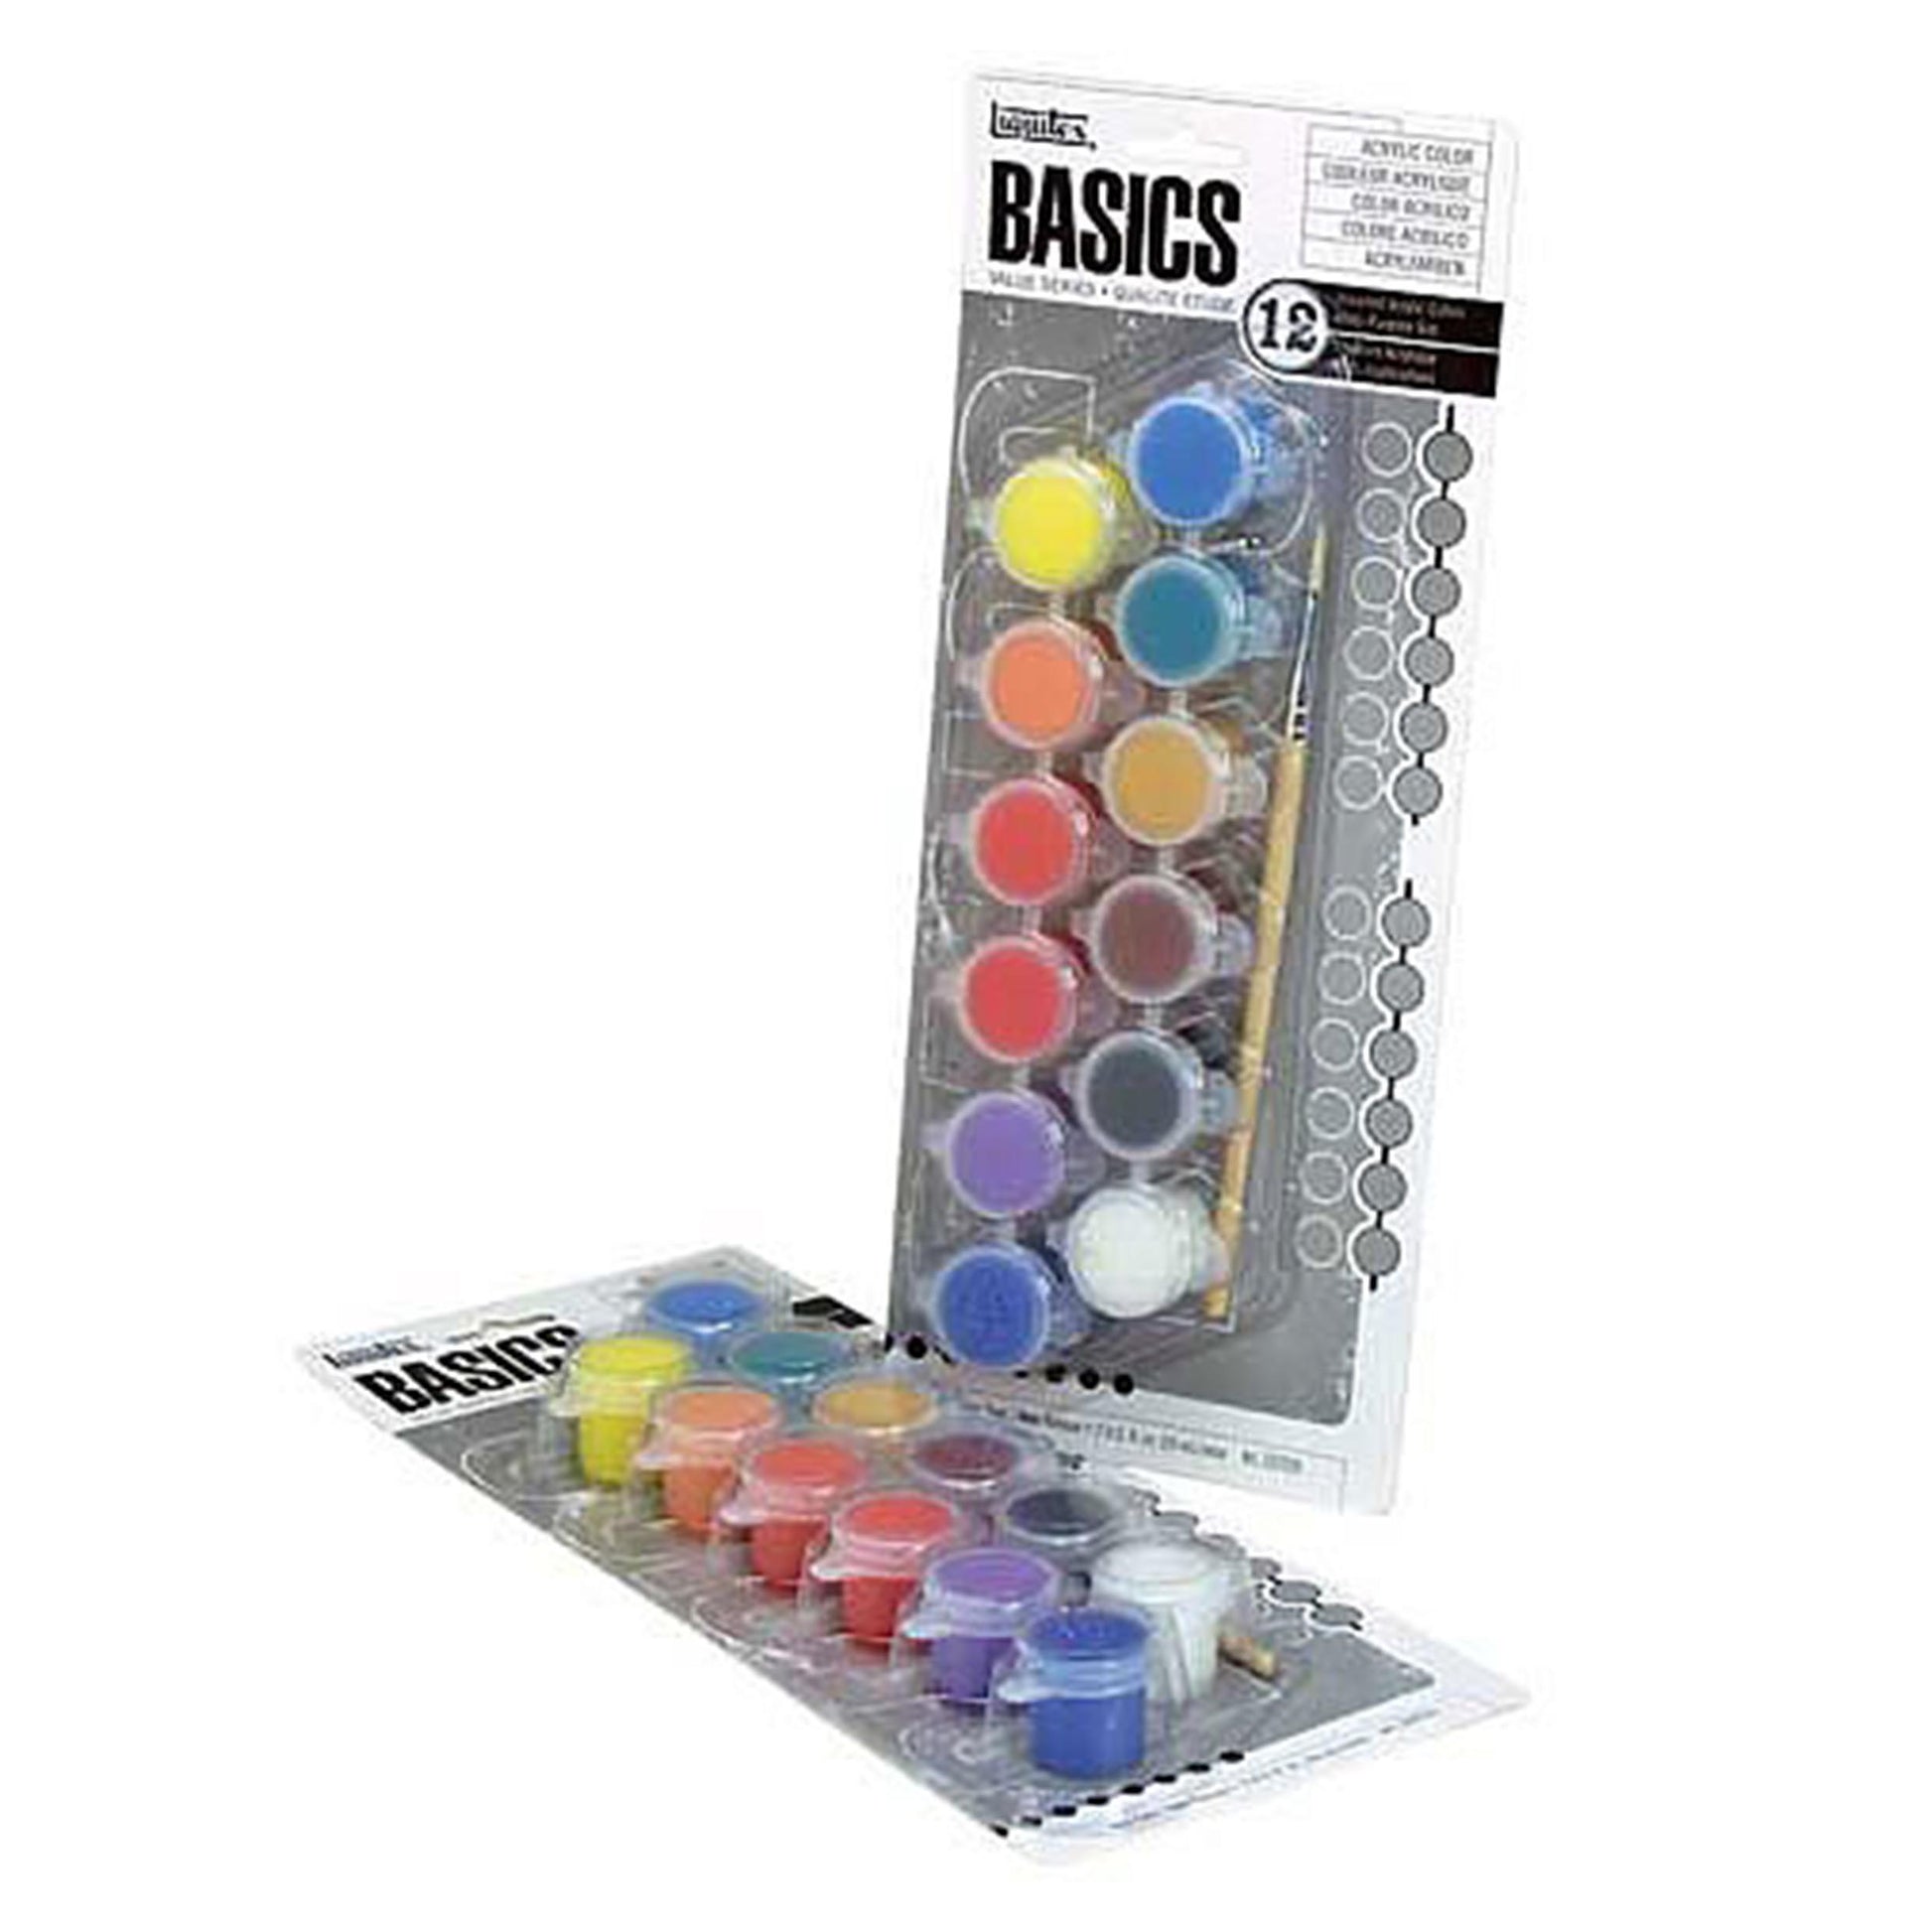 Juego de botes de pintura acrílica Liquitex BASICS de 12 colores